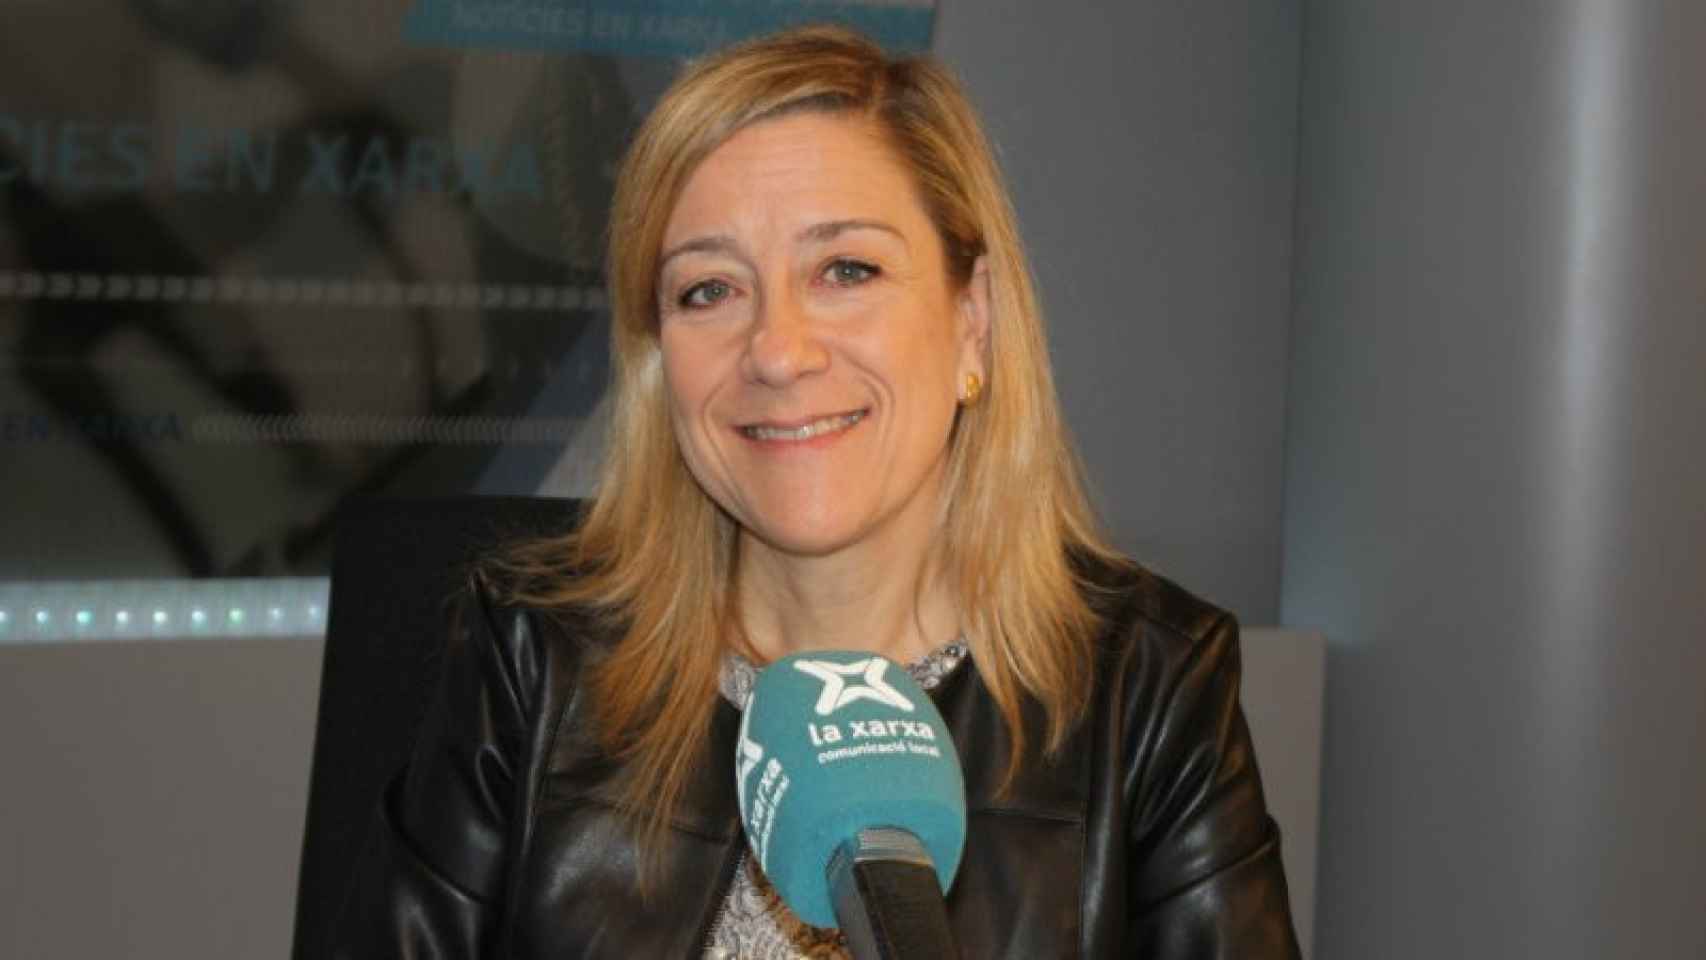 La alcaldesa de Vilanova i la Geltrú y presidenta de la AMI, Neus Lloveras